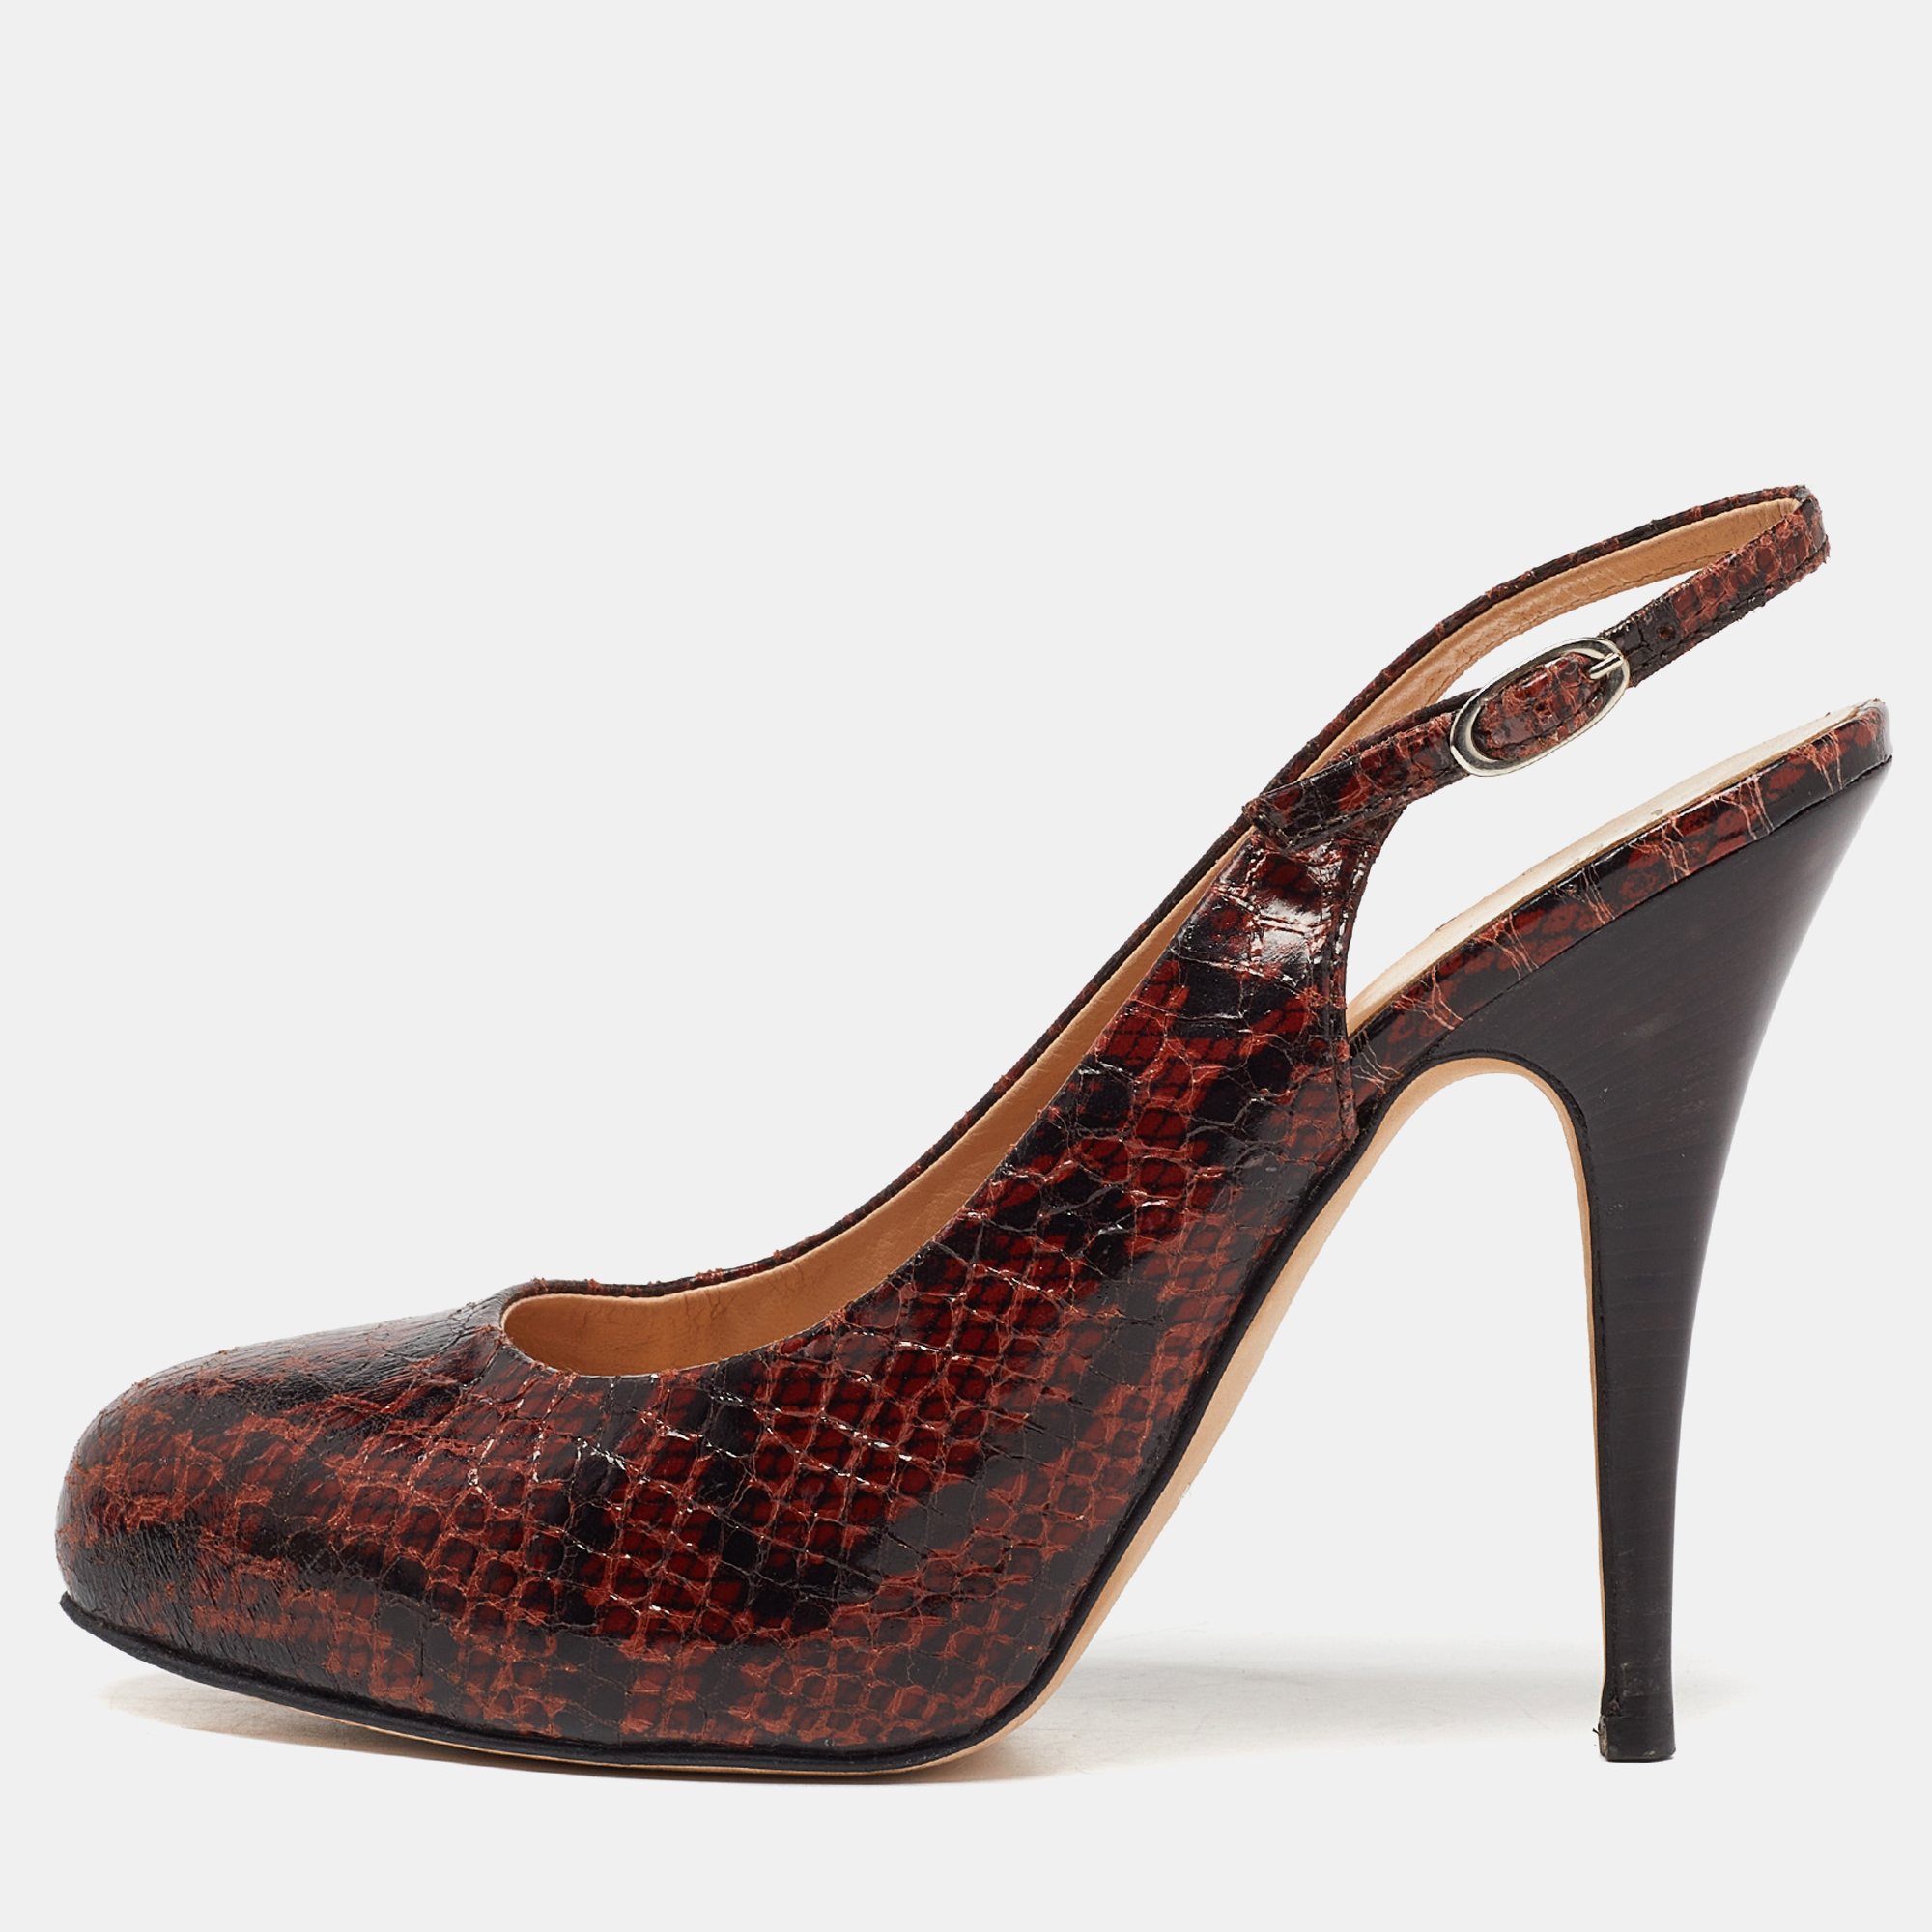 Giuseppe zanotti brown python embossed leather slingback platform sandals size 39